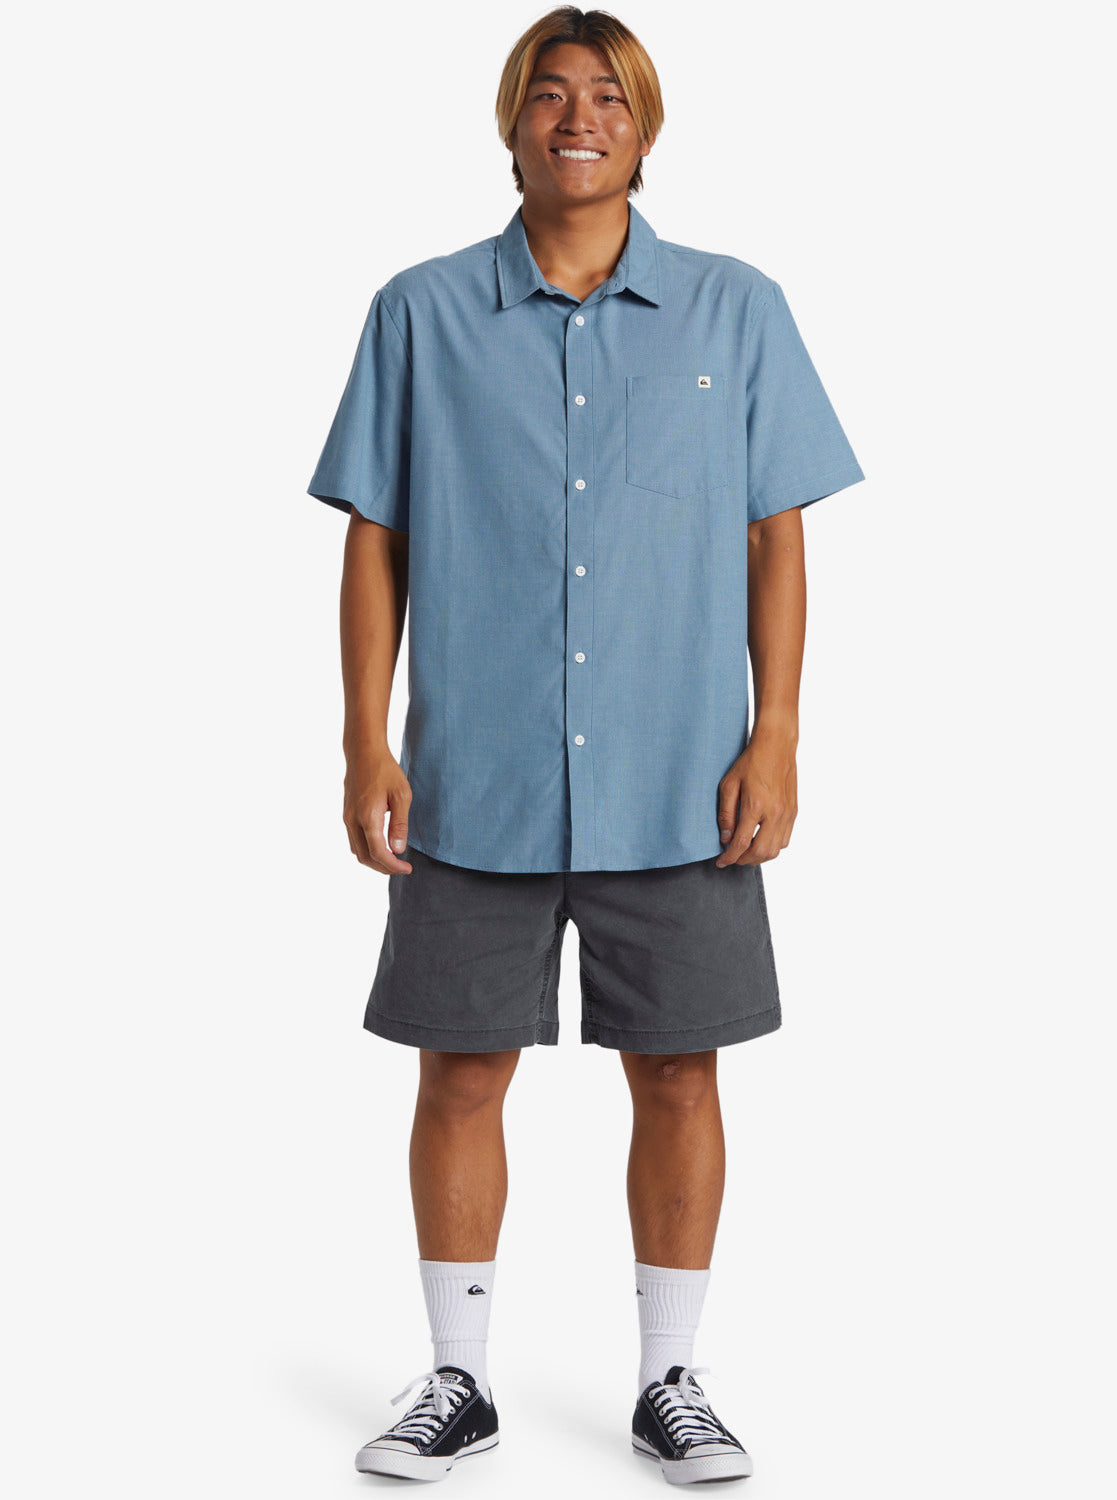 Shoreline Classic Short Sleeve Shirt - Blue Shadow